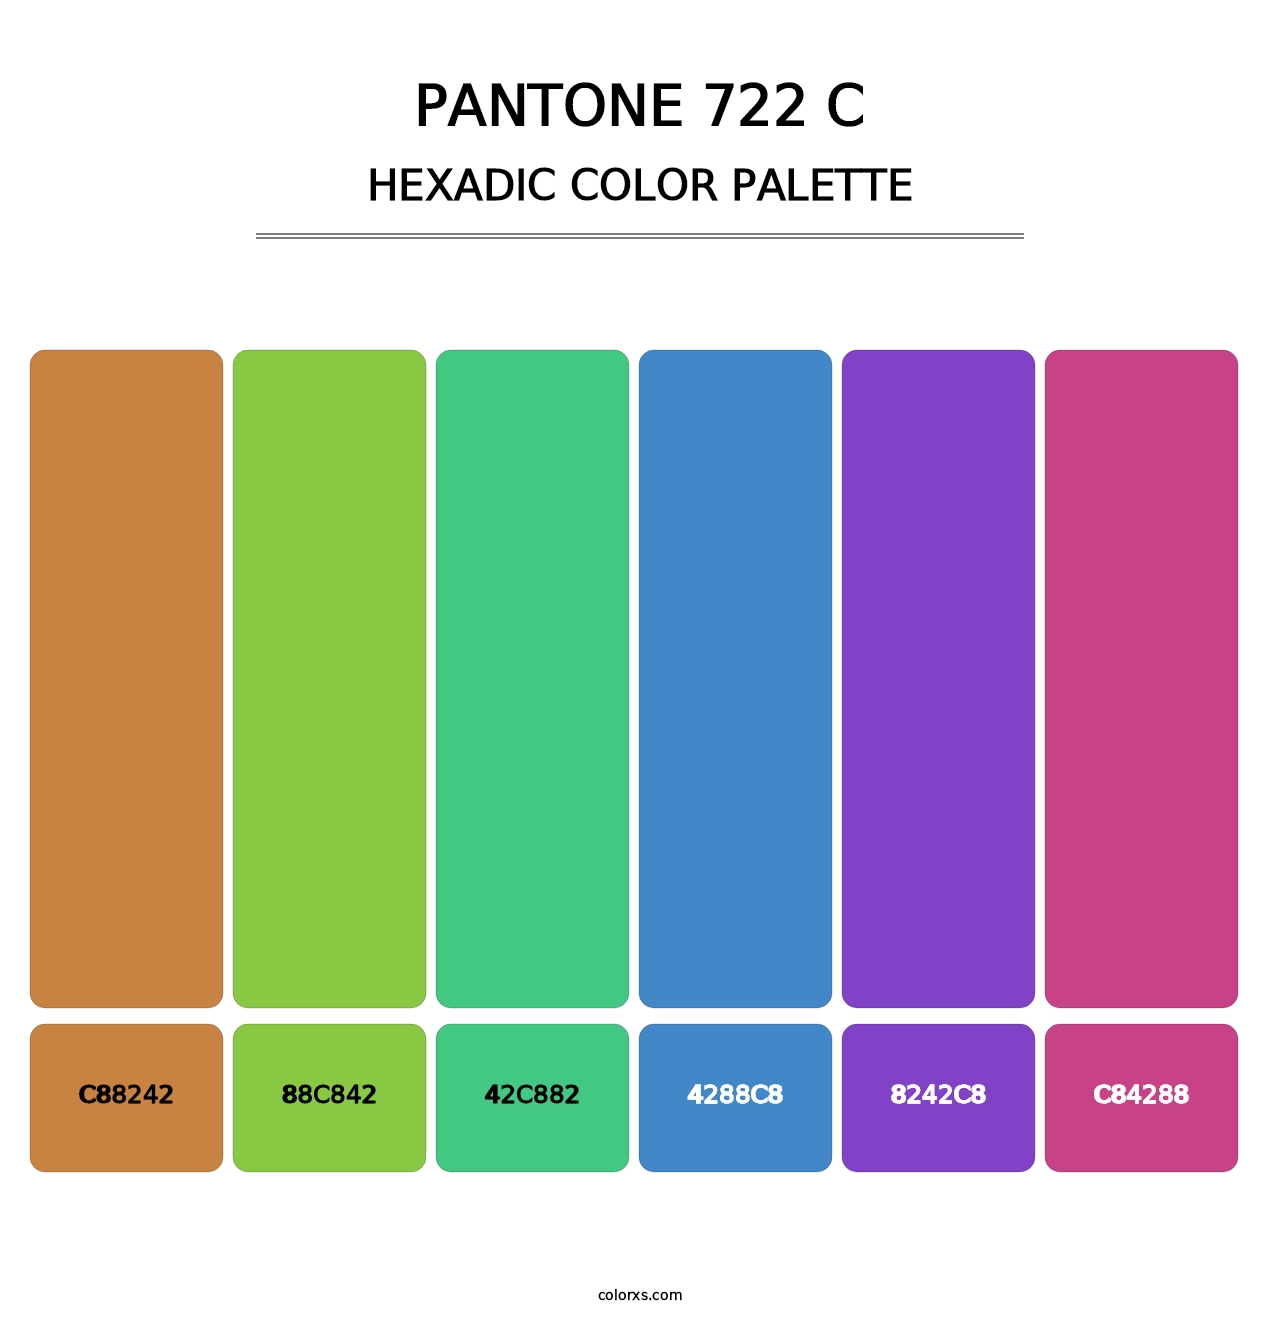 PANTONE 722 C - Hexadic Color Palette